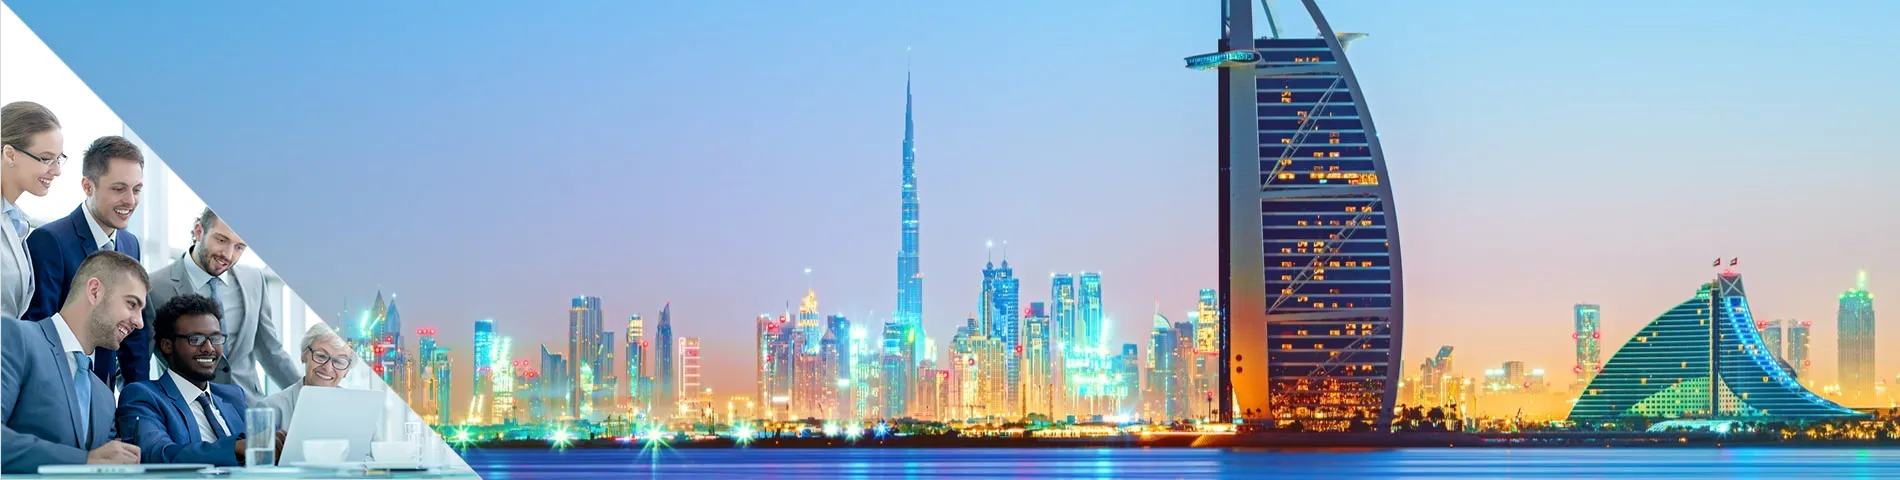 Dubai - Gruppo Business 